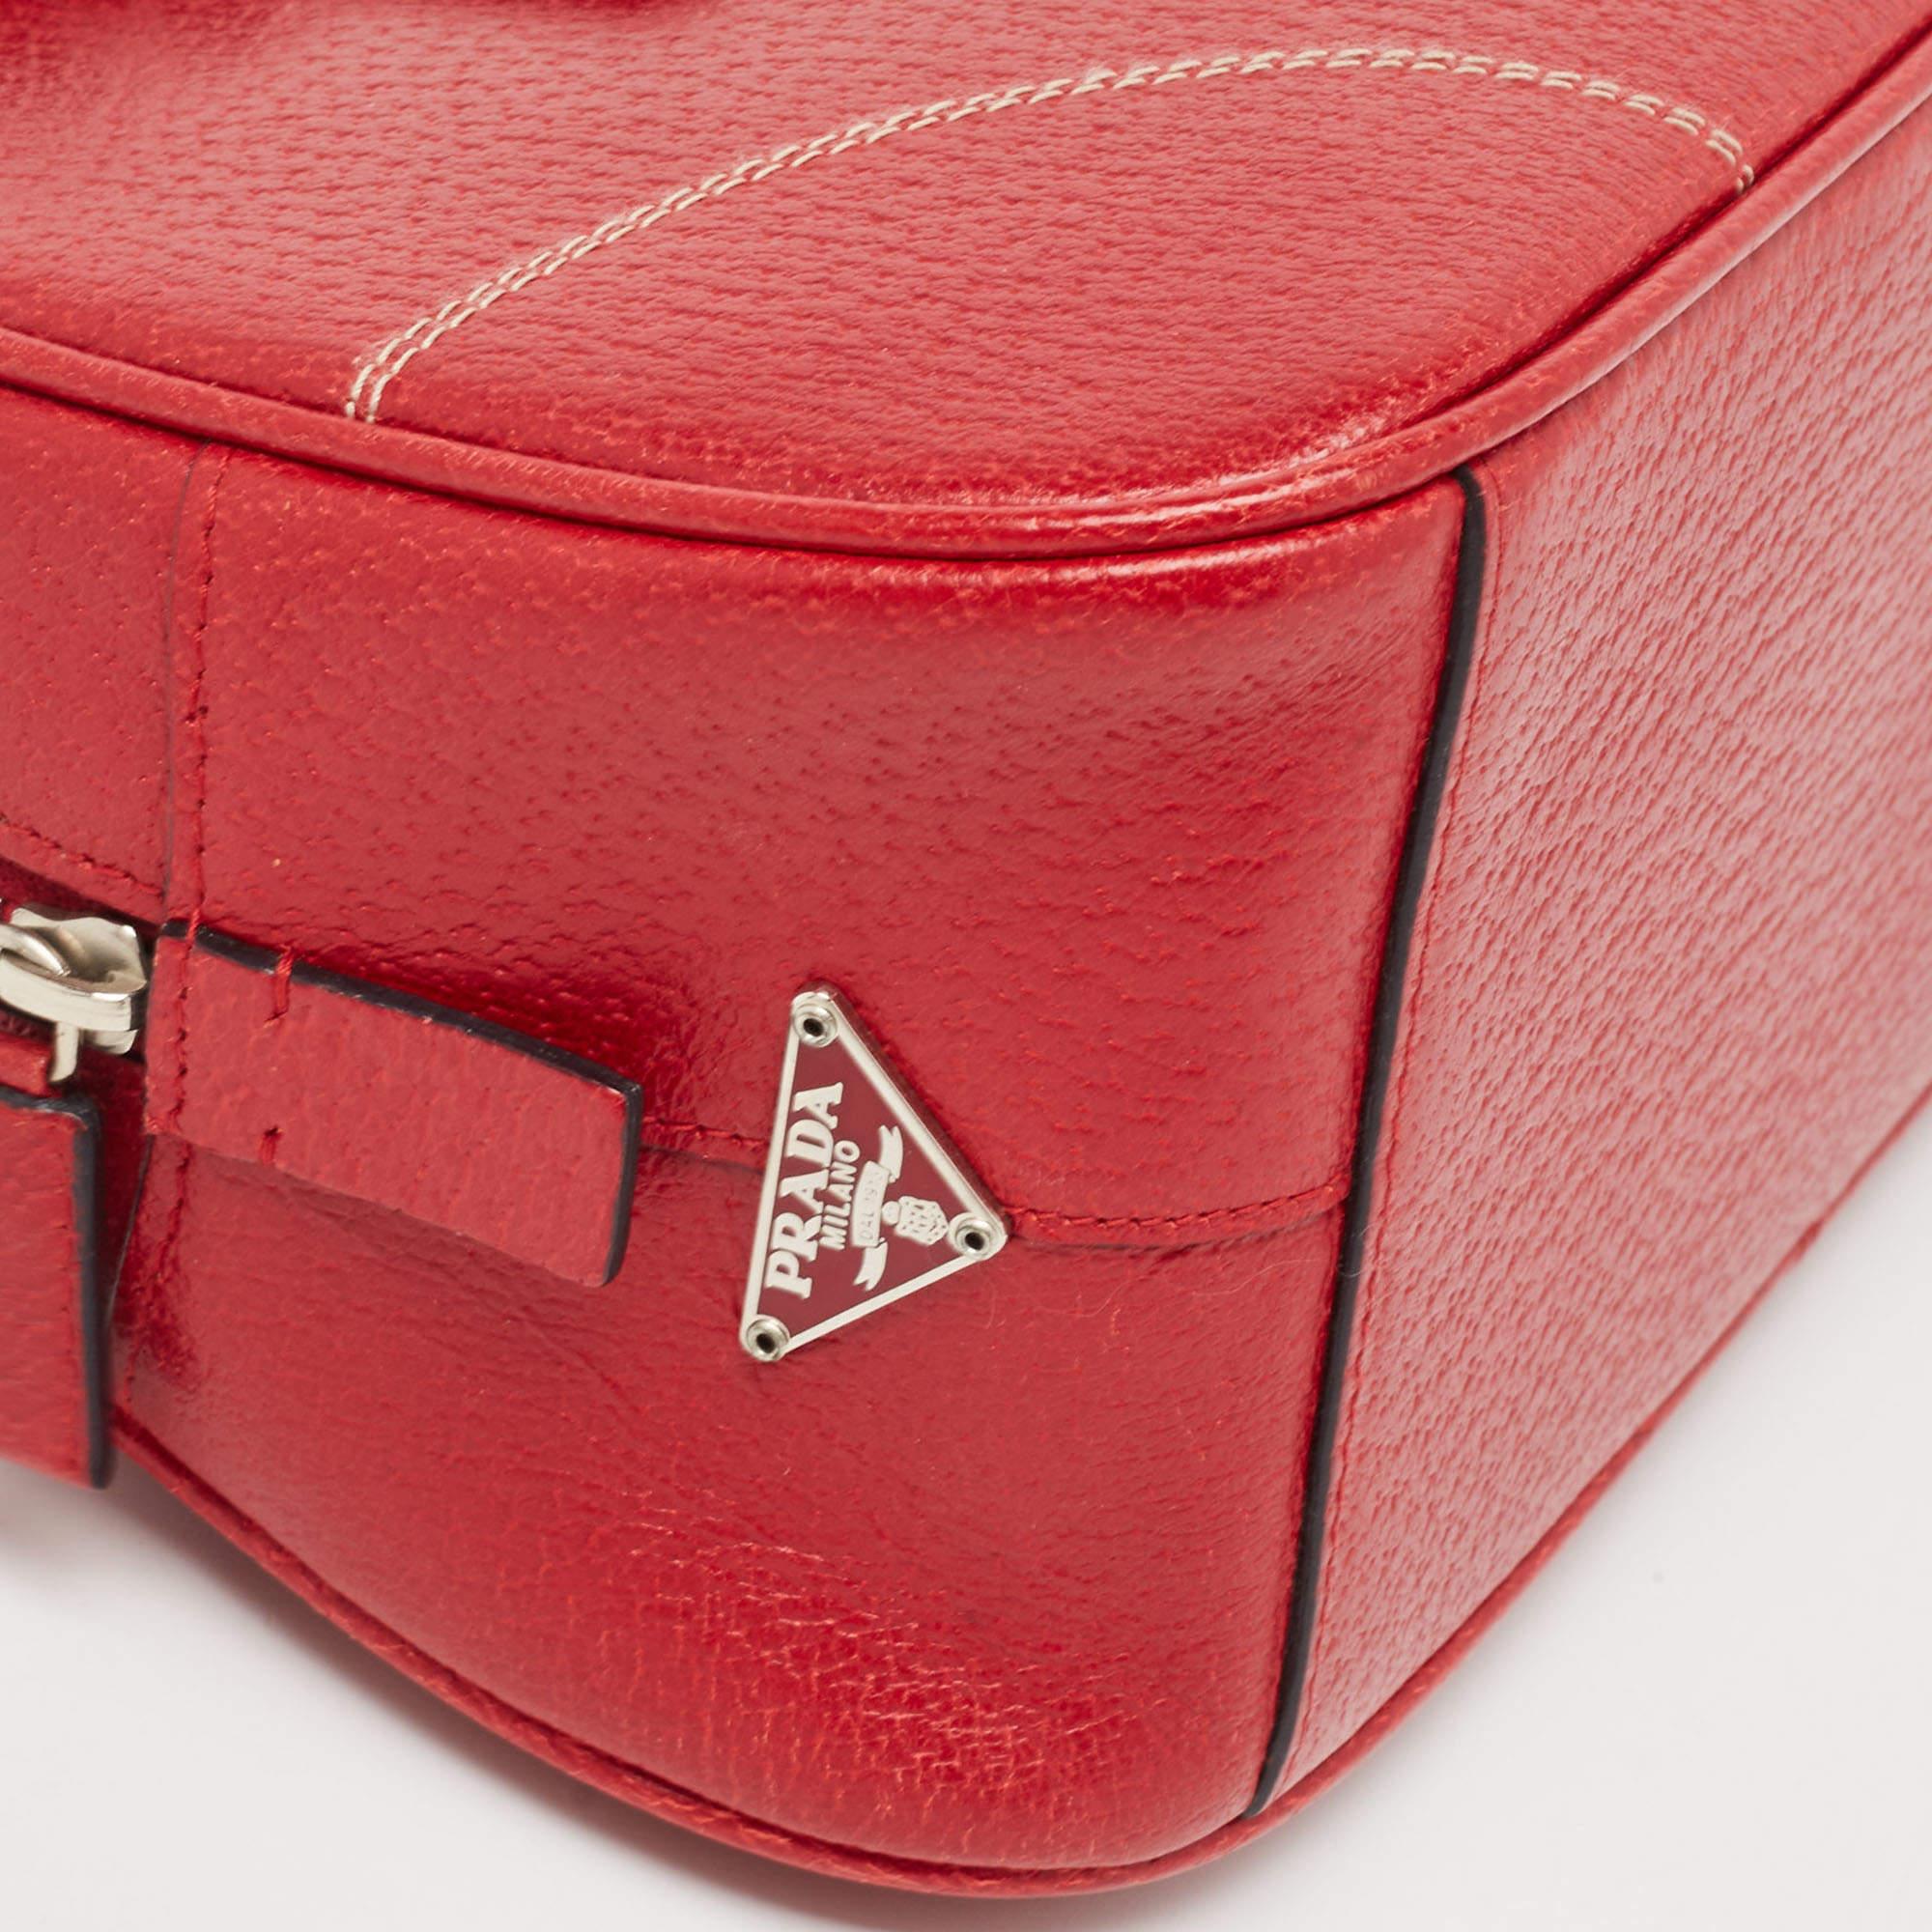 Prada Red Leather Mini Bowler Bag For Sale 4